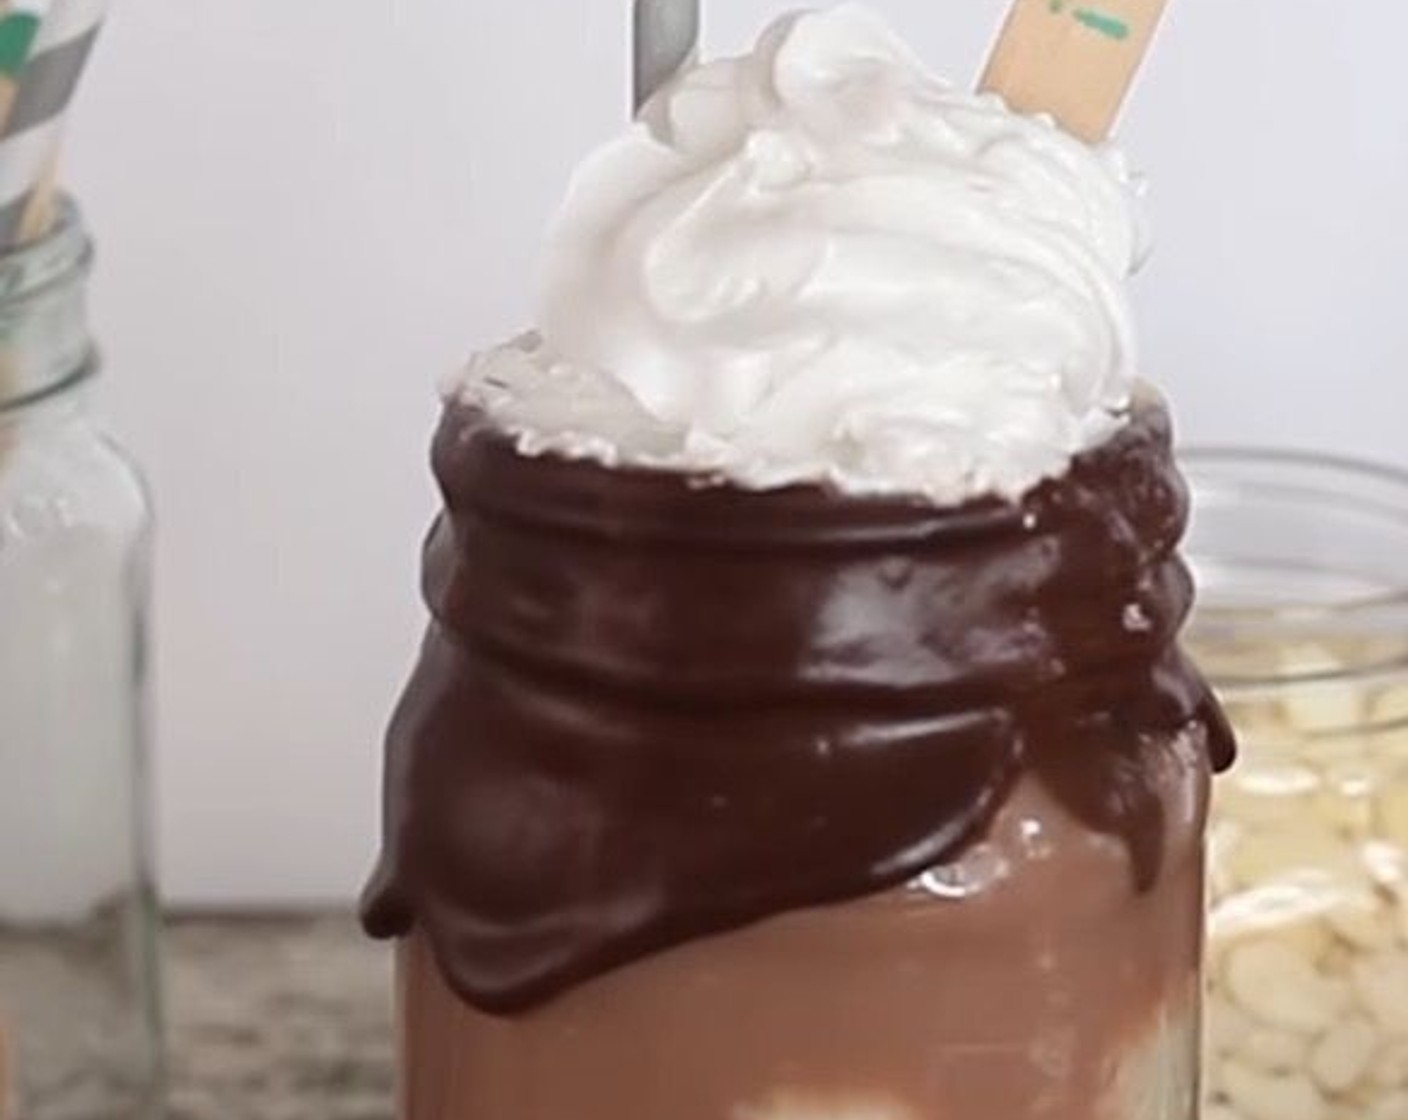 Vegan Ice Cream Float with Chocolate Beverage